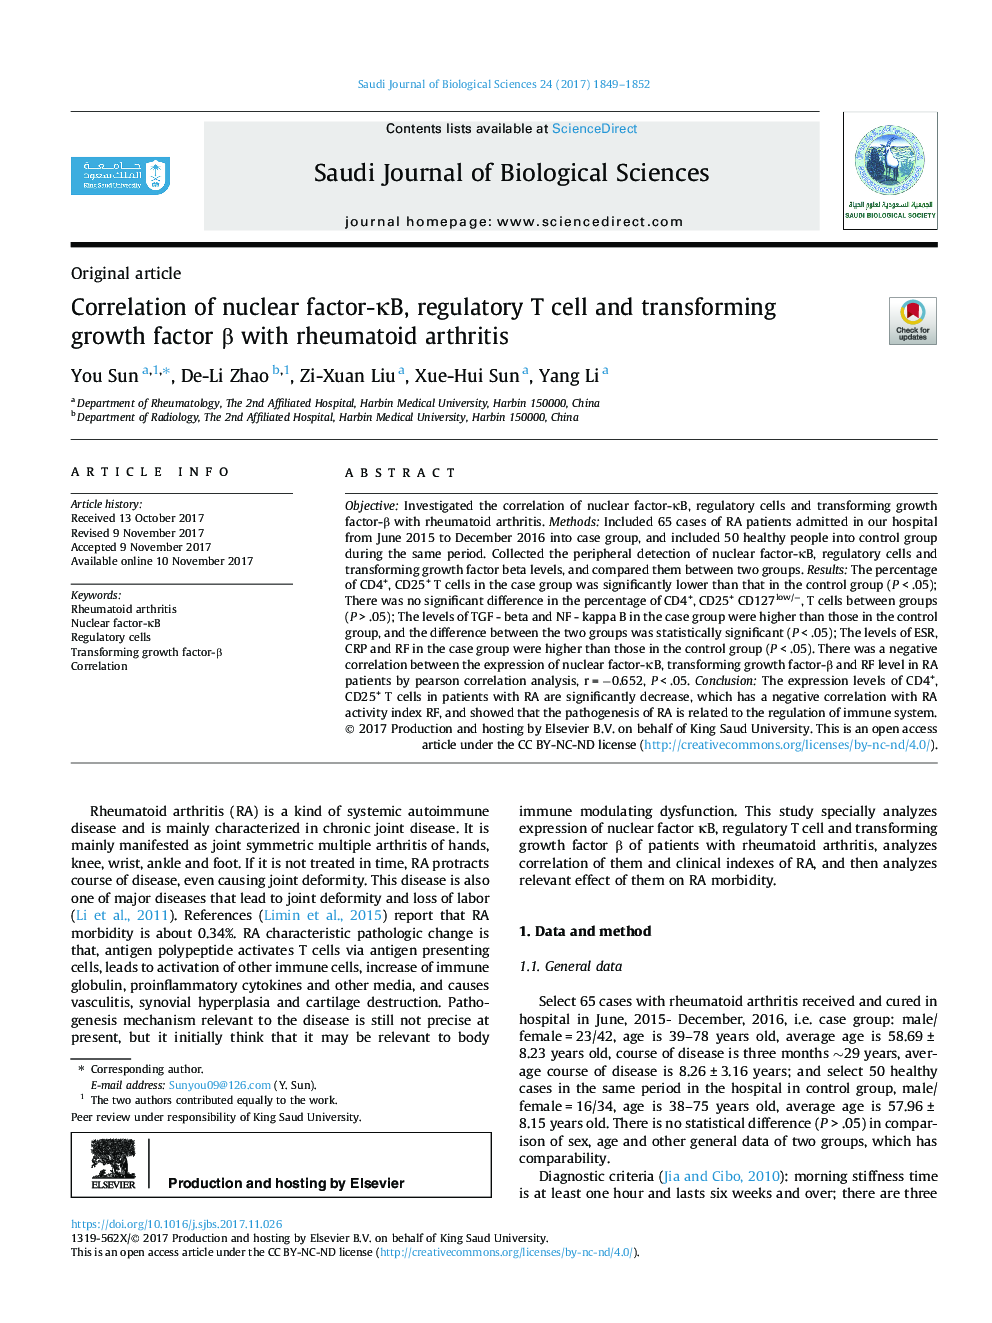 Correlation of nuclear factor-ÎºB, regulatory T cell and transforming growth factor Î² with rheumatoid arthritis